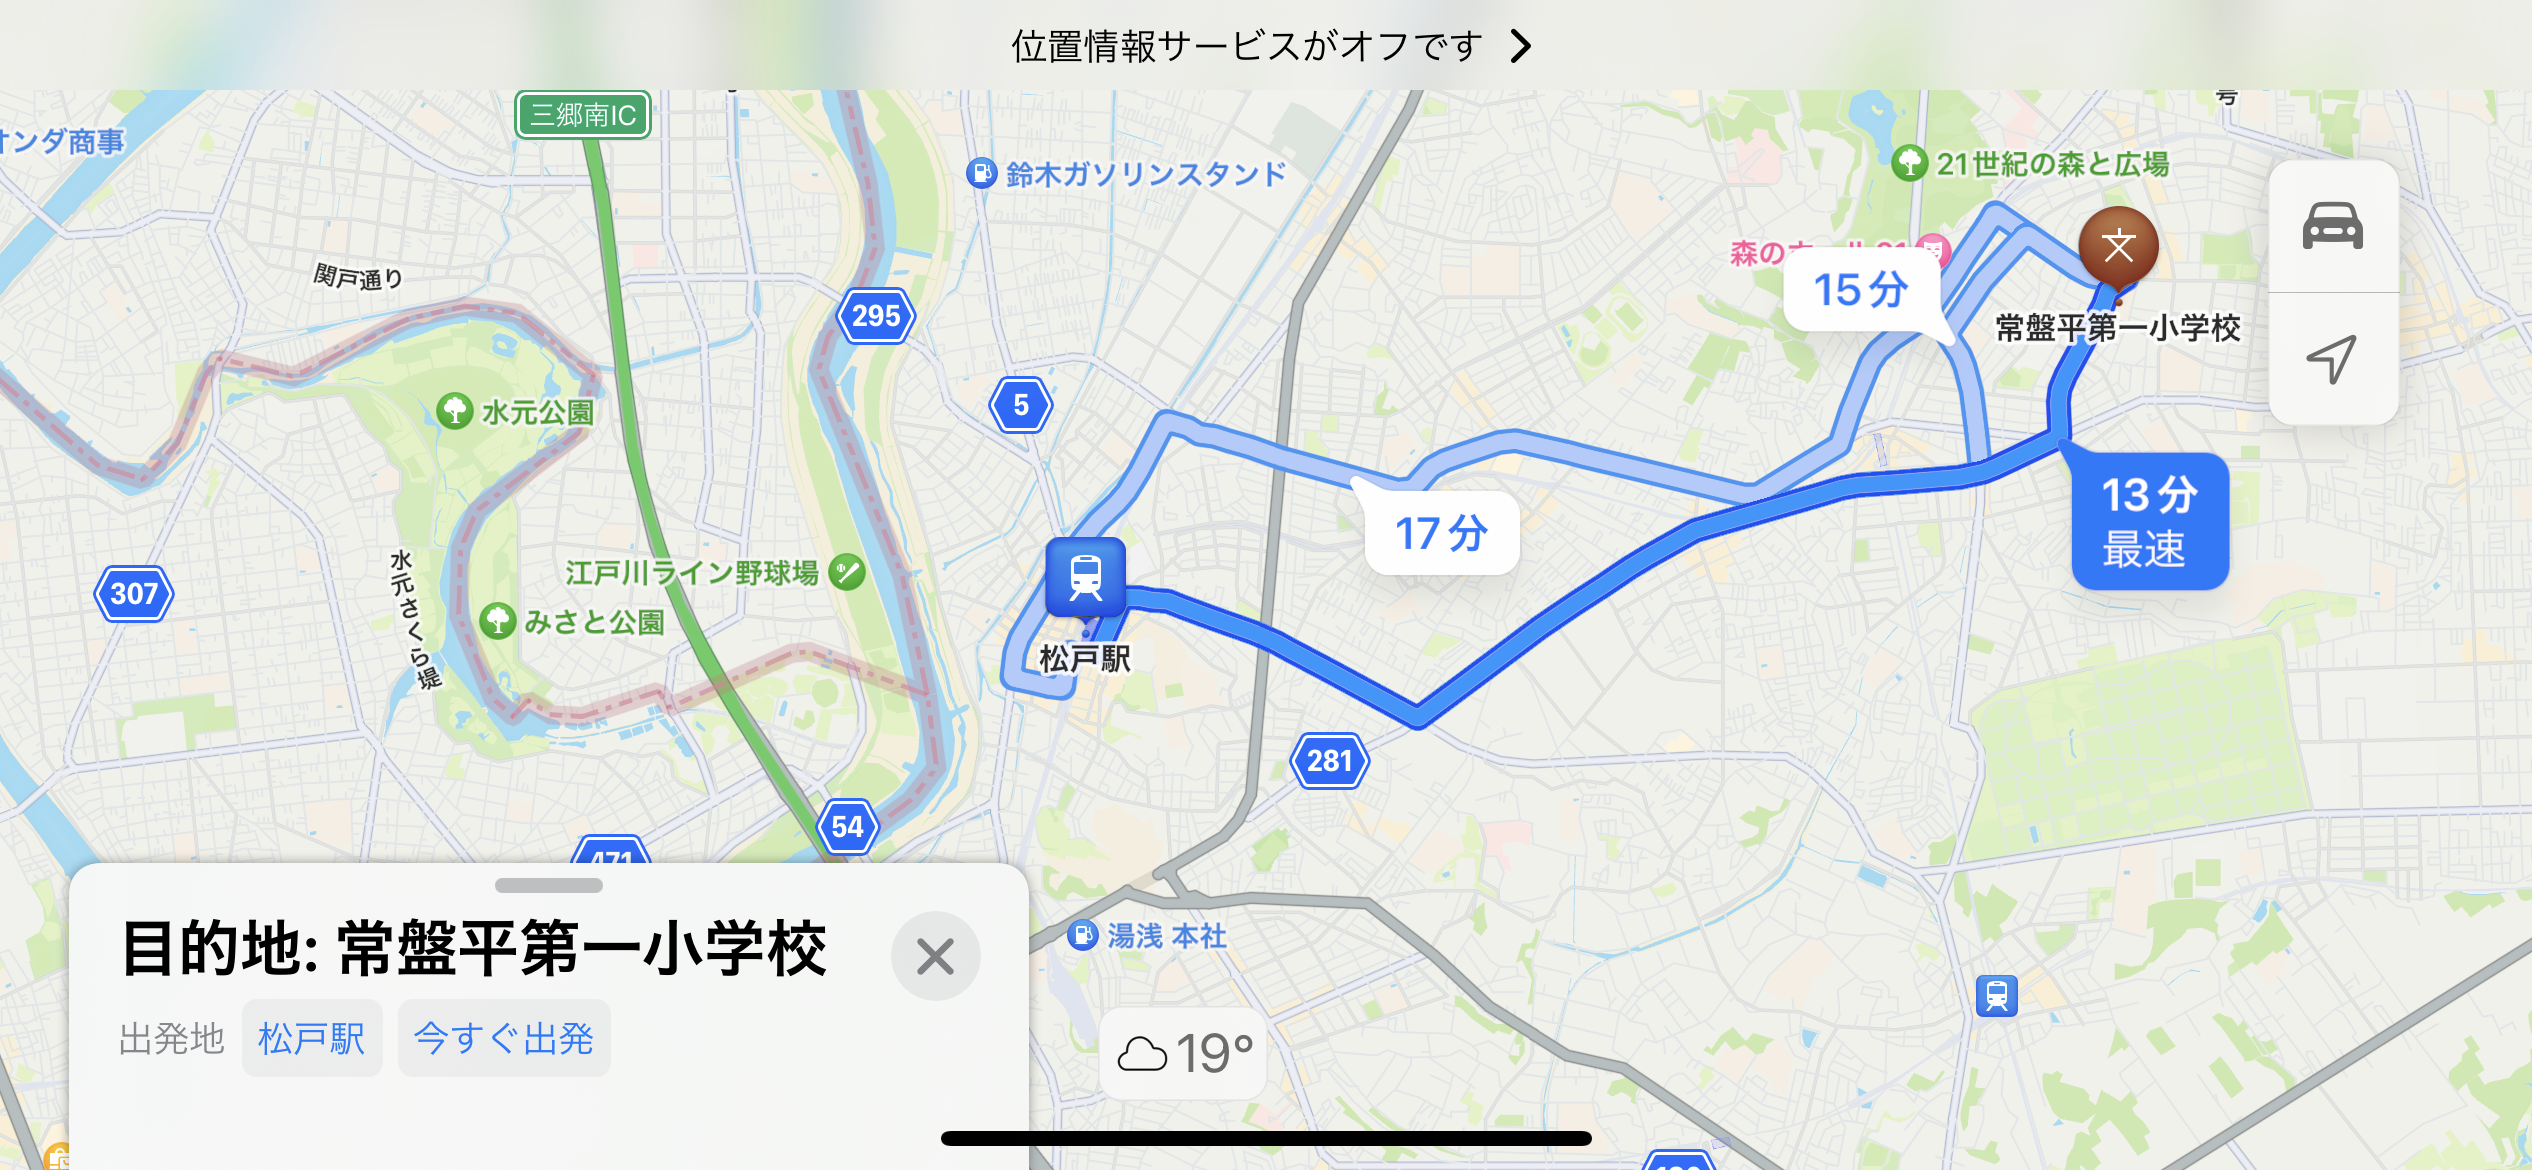 松戸駅から松戸市立常盤平第一小学校経路